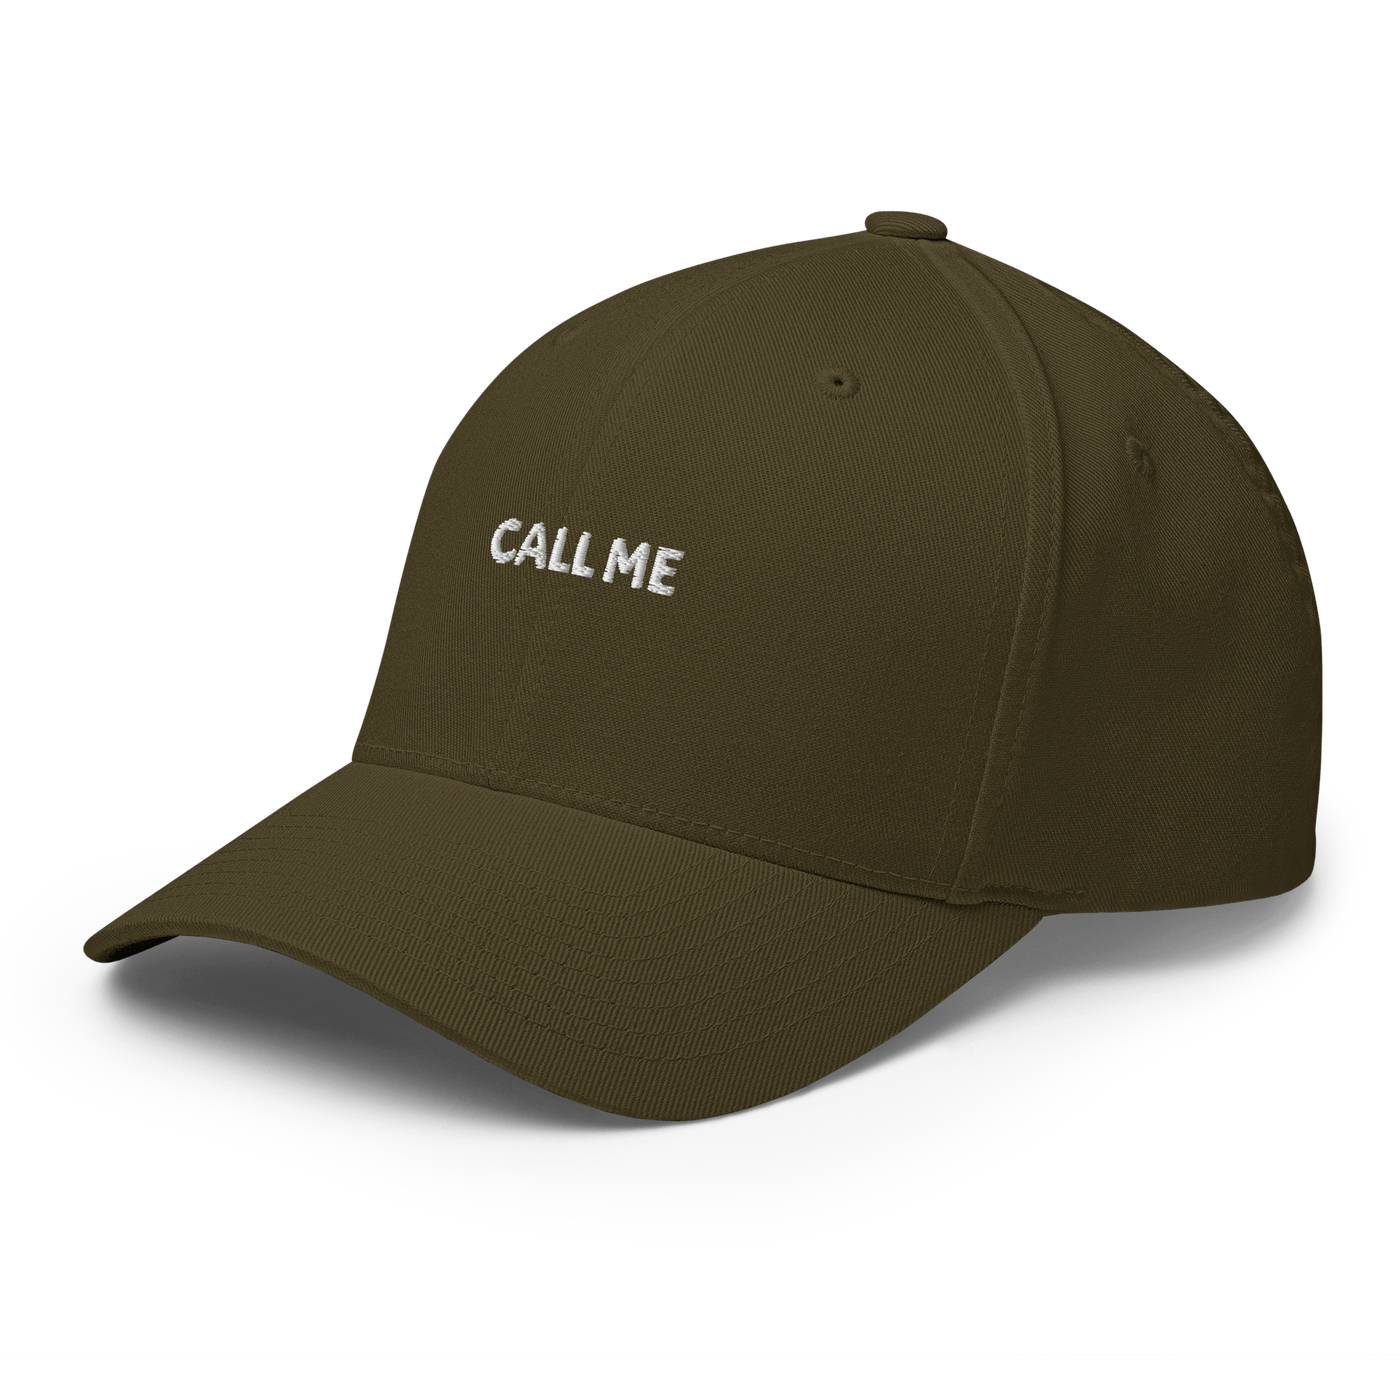 Call Me Flexfit Cap - Olive - S/M - Just Another Cap Store